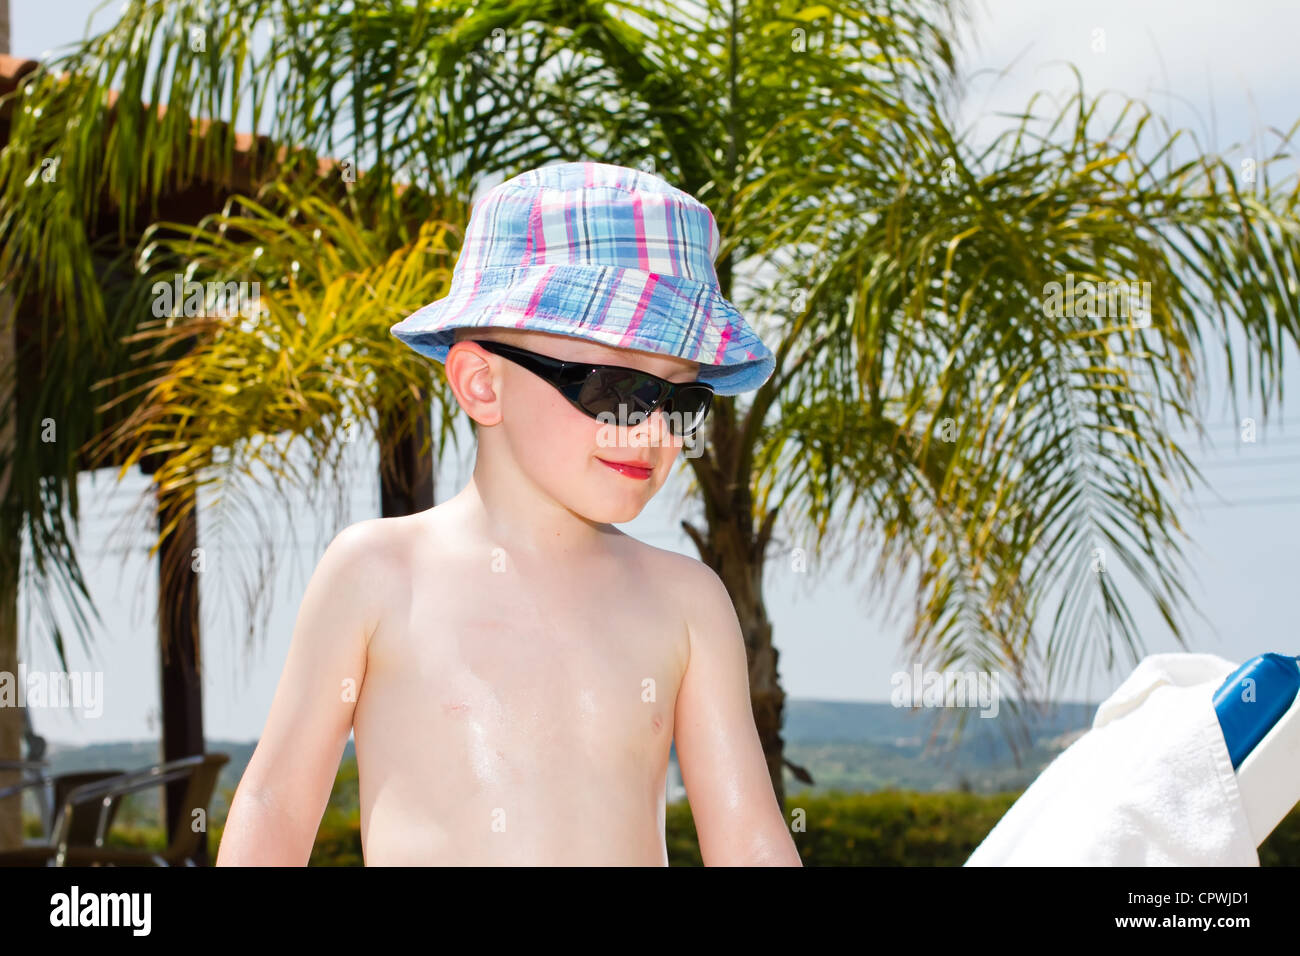 little boy oiled up with sun cream Stock Photo